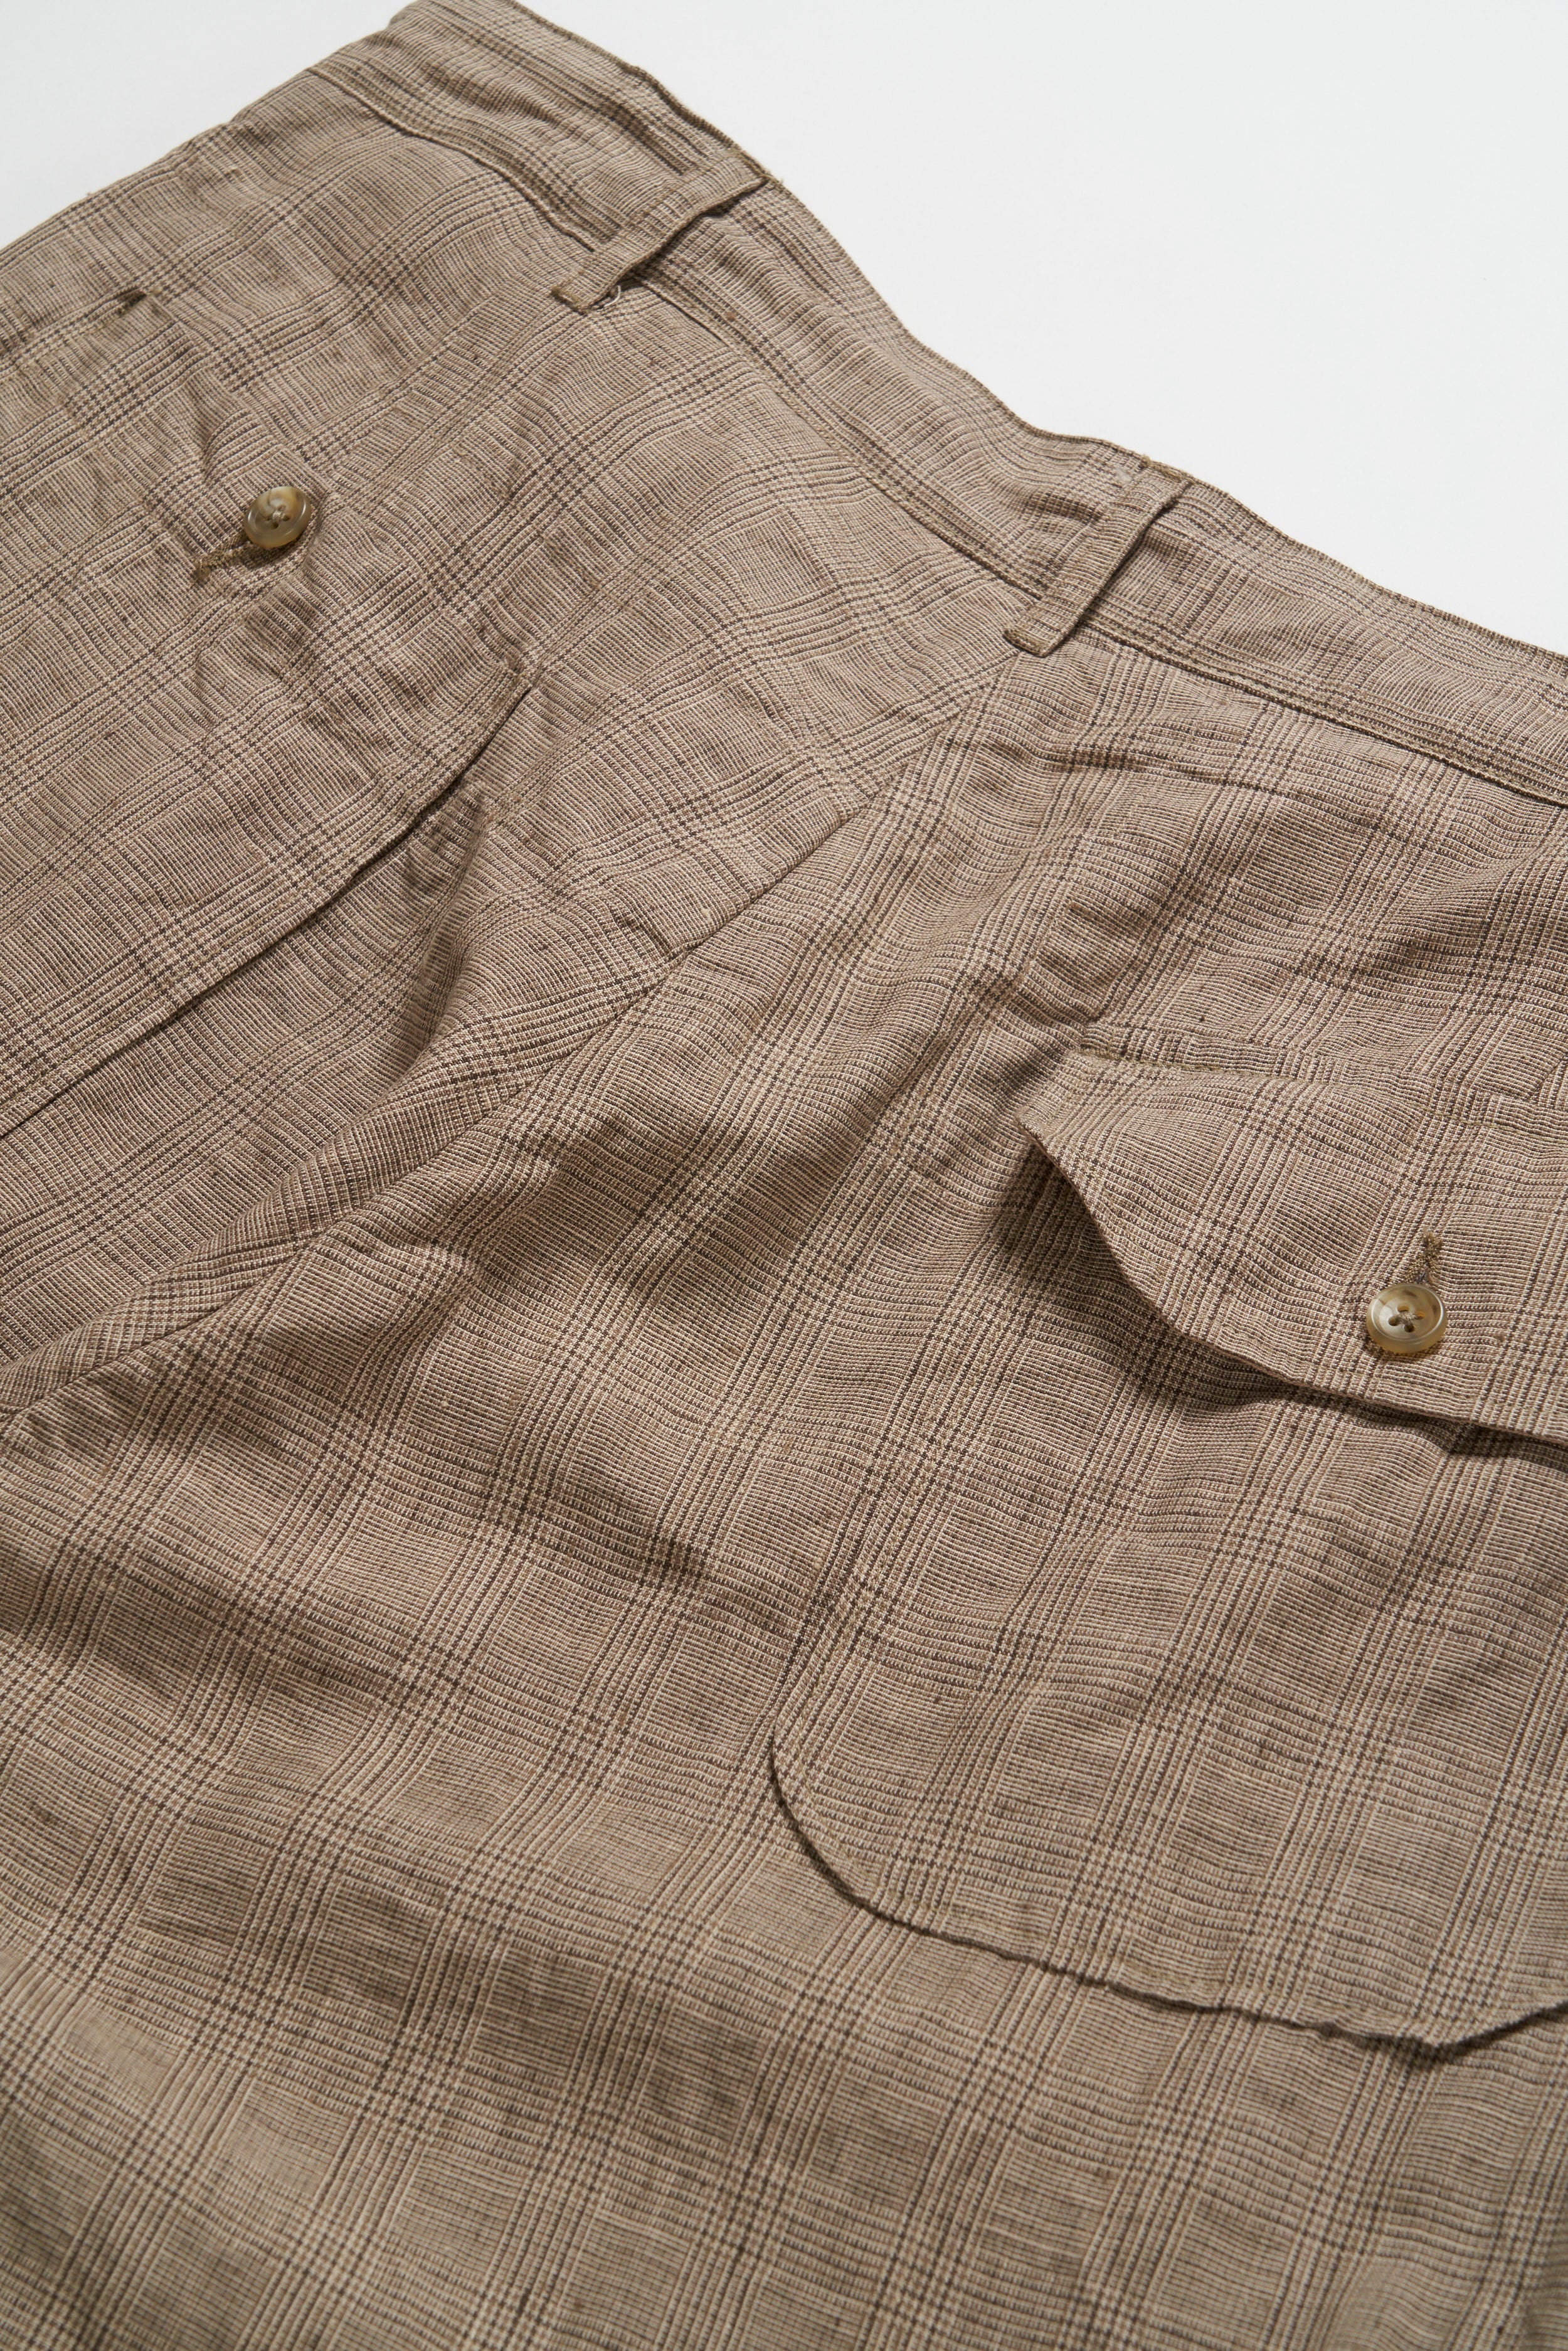 Engineered Garments Carlyle Pant - Beige Linen Glen Plaid